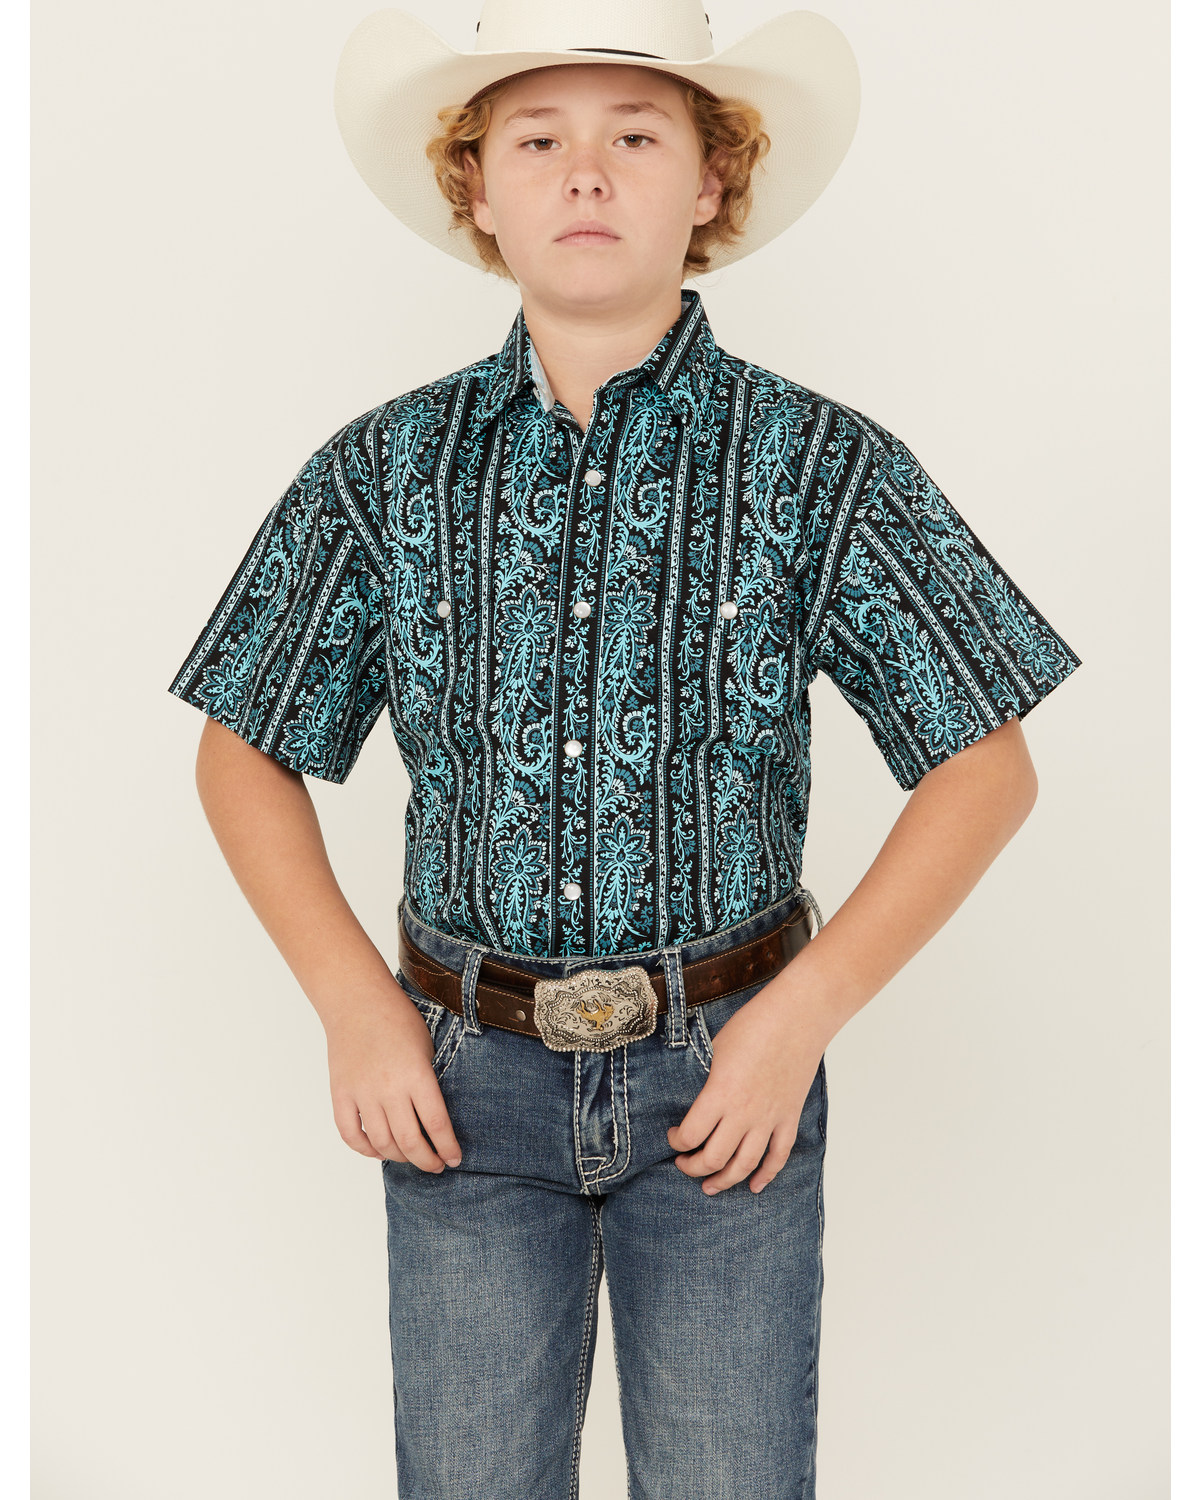 Panhandle Select Boys' Paisley Print Short Sleeve Pearl Snap Western Shirt